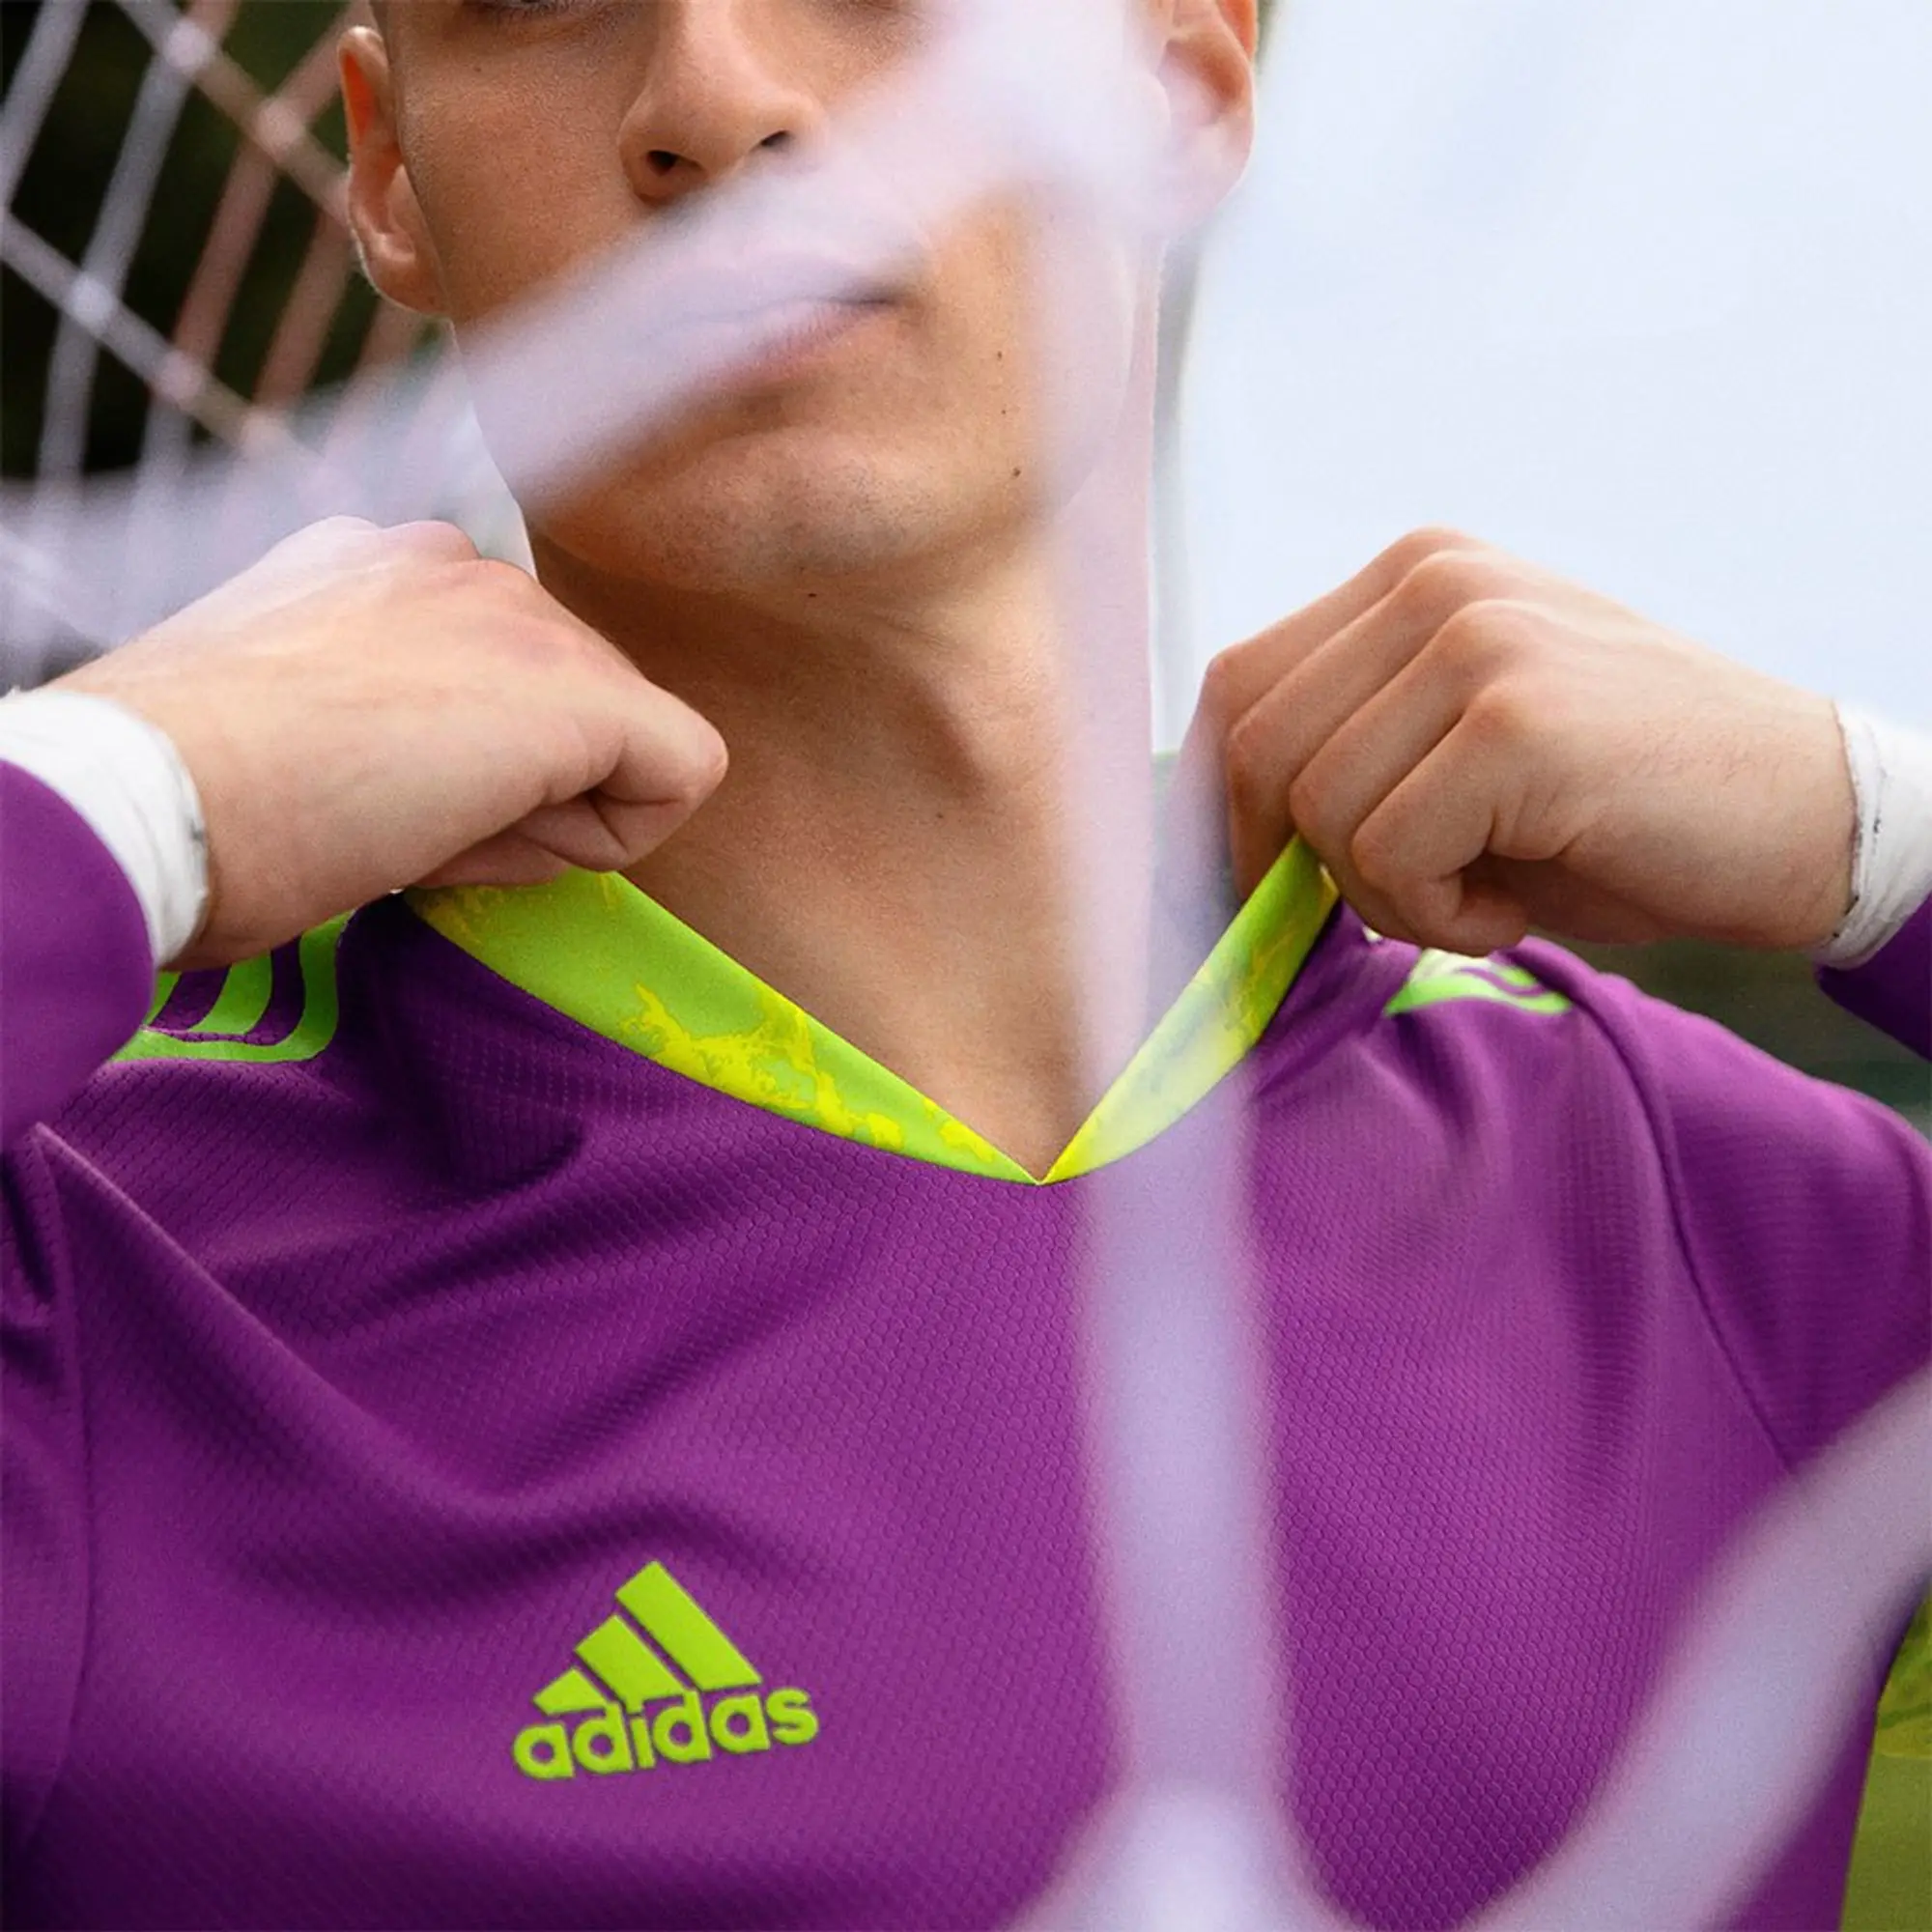 Adidas Goalkeeper Shirt Adipro 20 - Purple